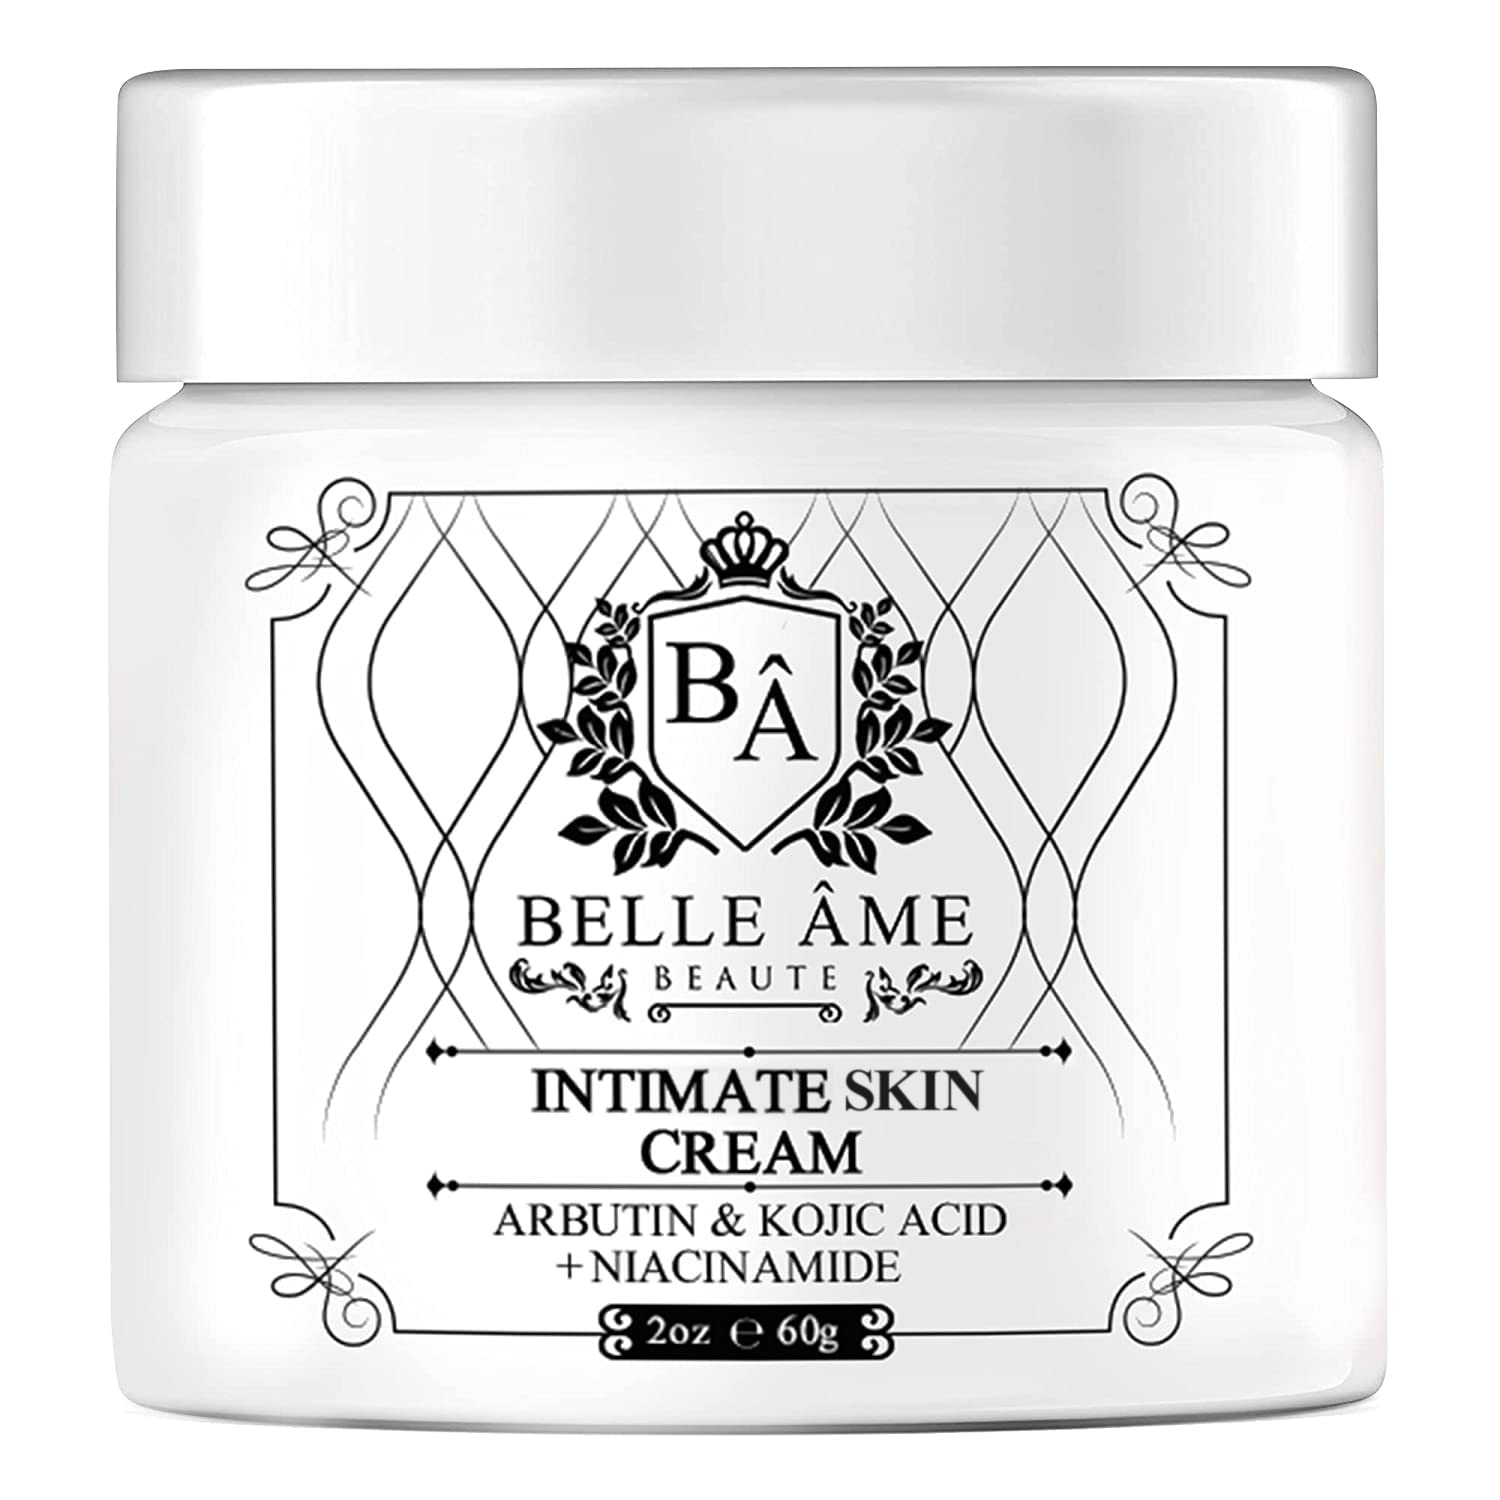 Belle ame cream